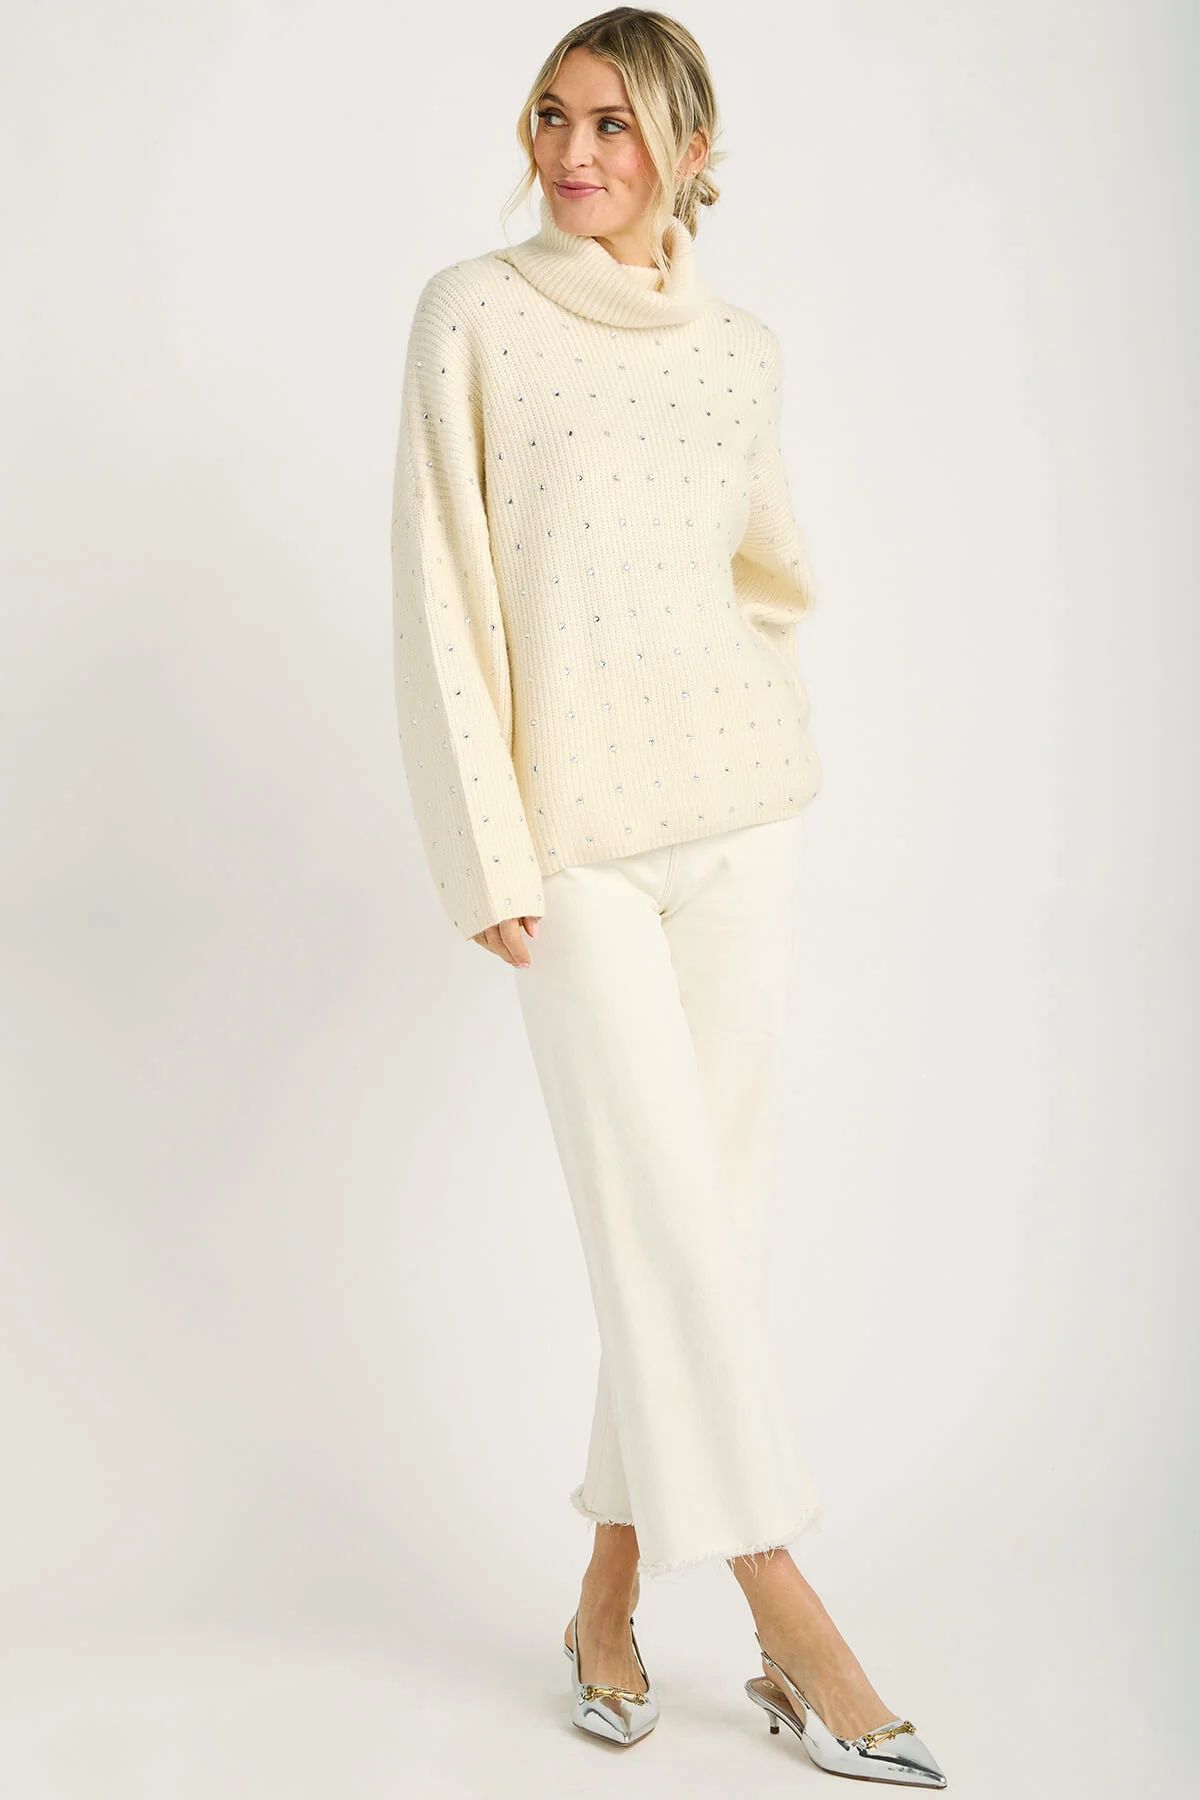 Fate Pearl Rhinestone Embellished Turtleneck Sweater | Social Threads